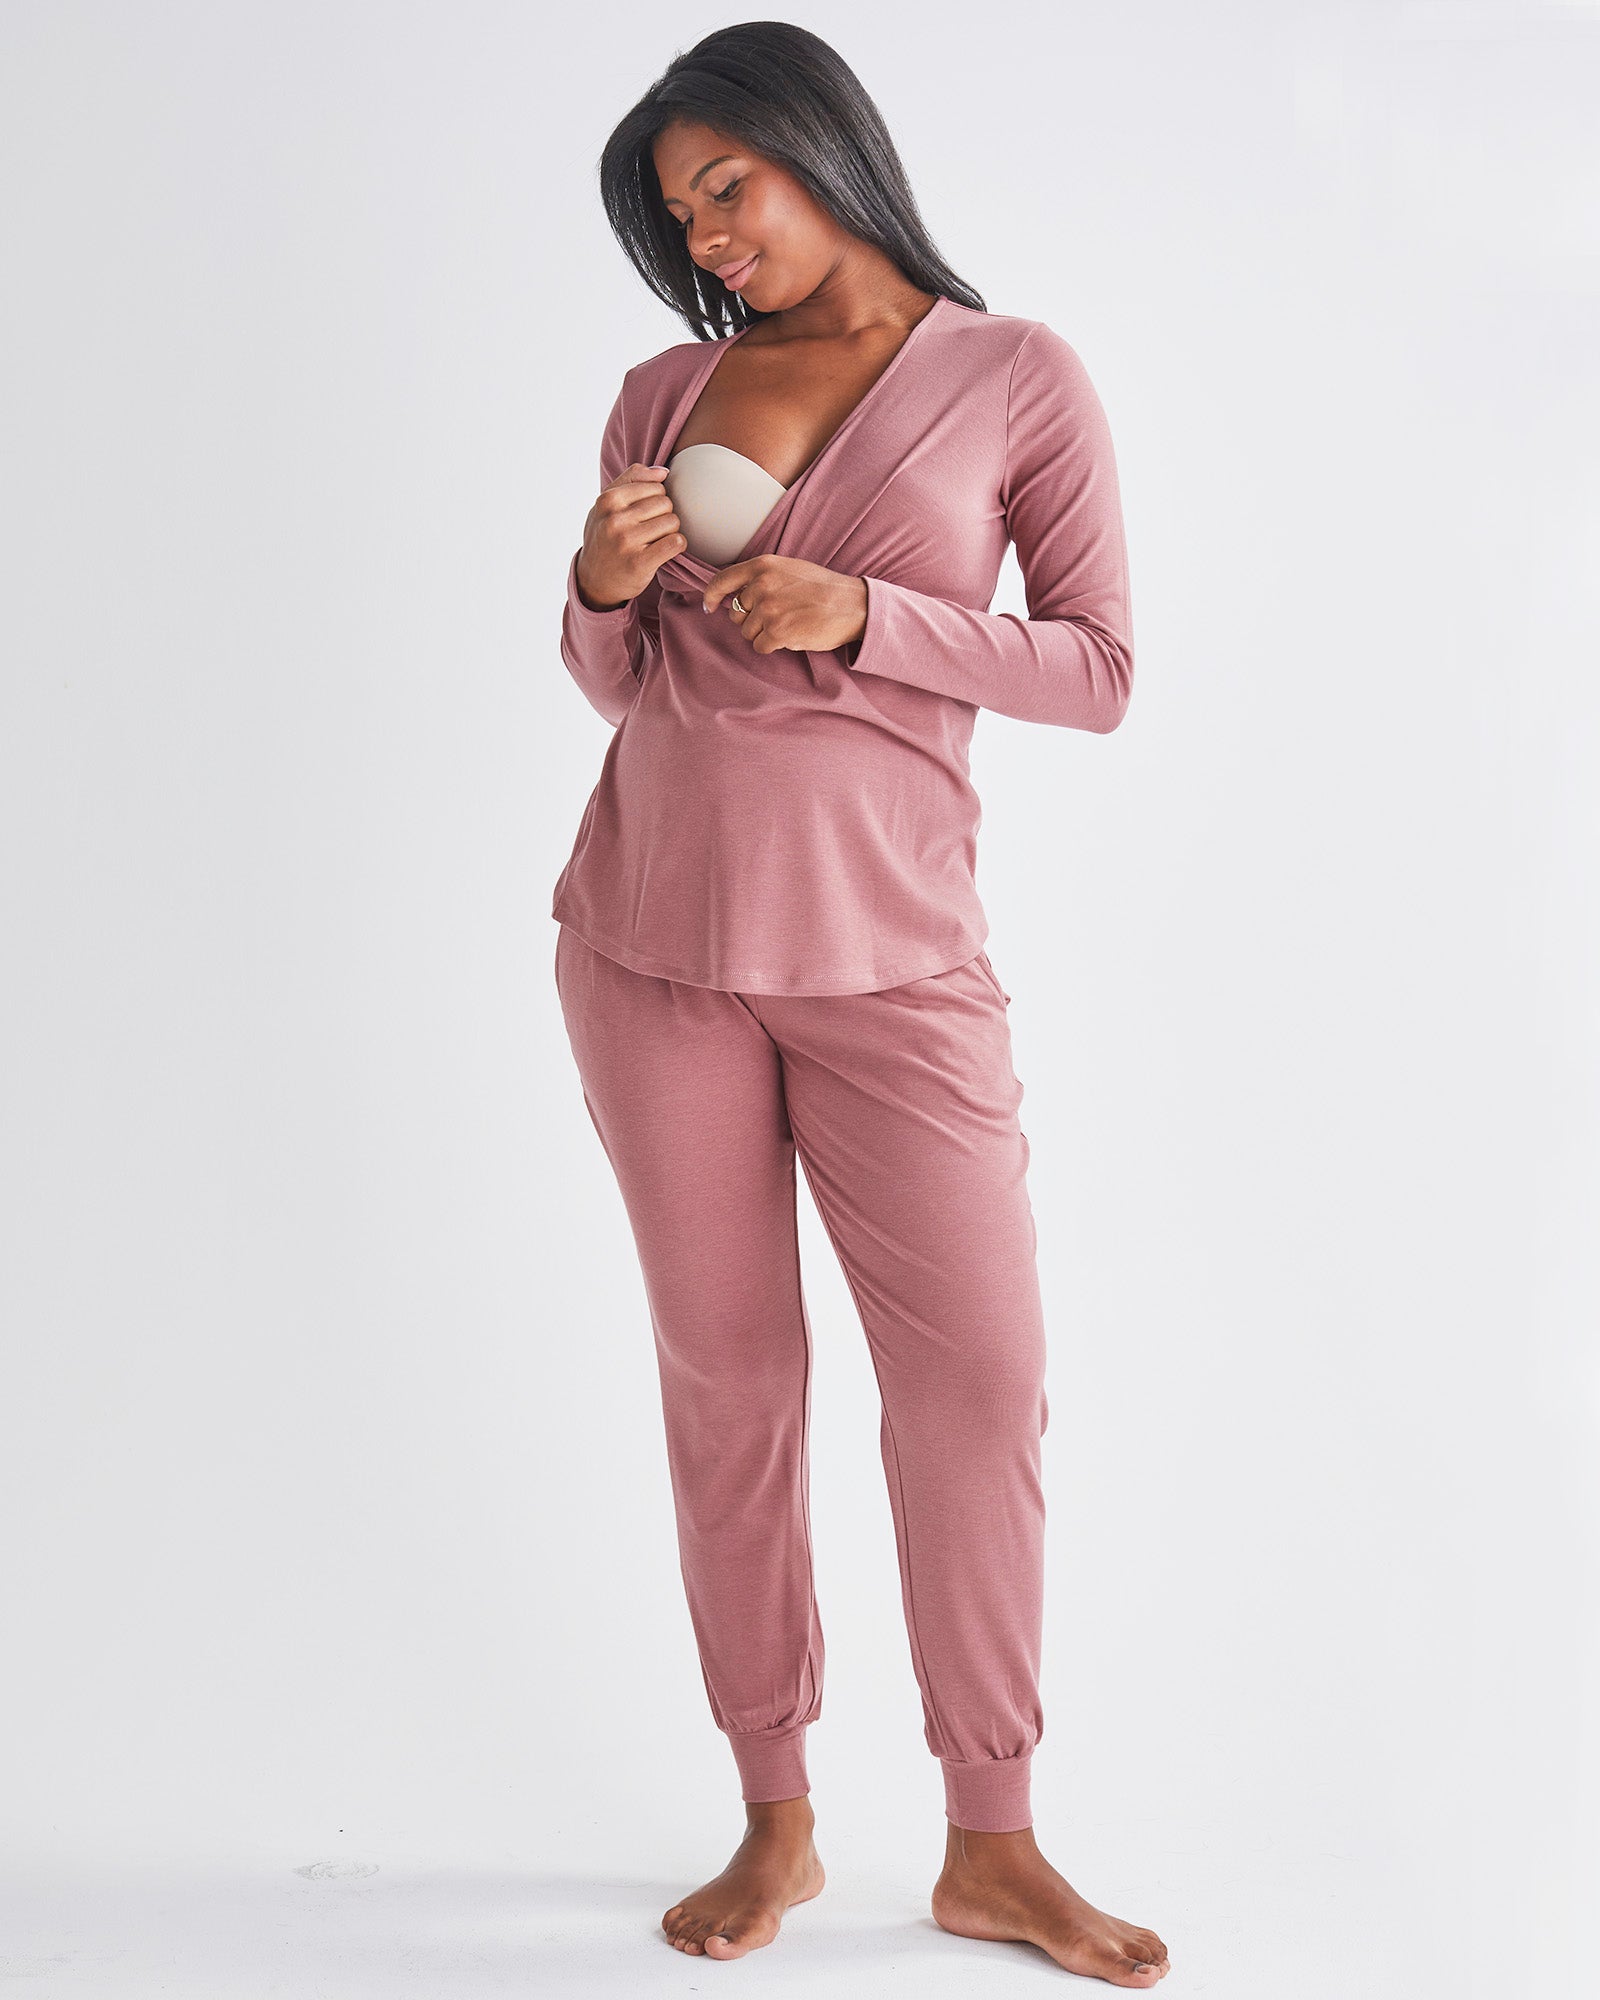 Nursing friendly loungewear/pyjamas set in pink